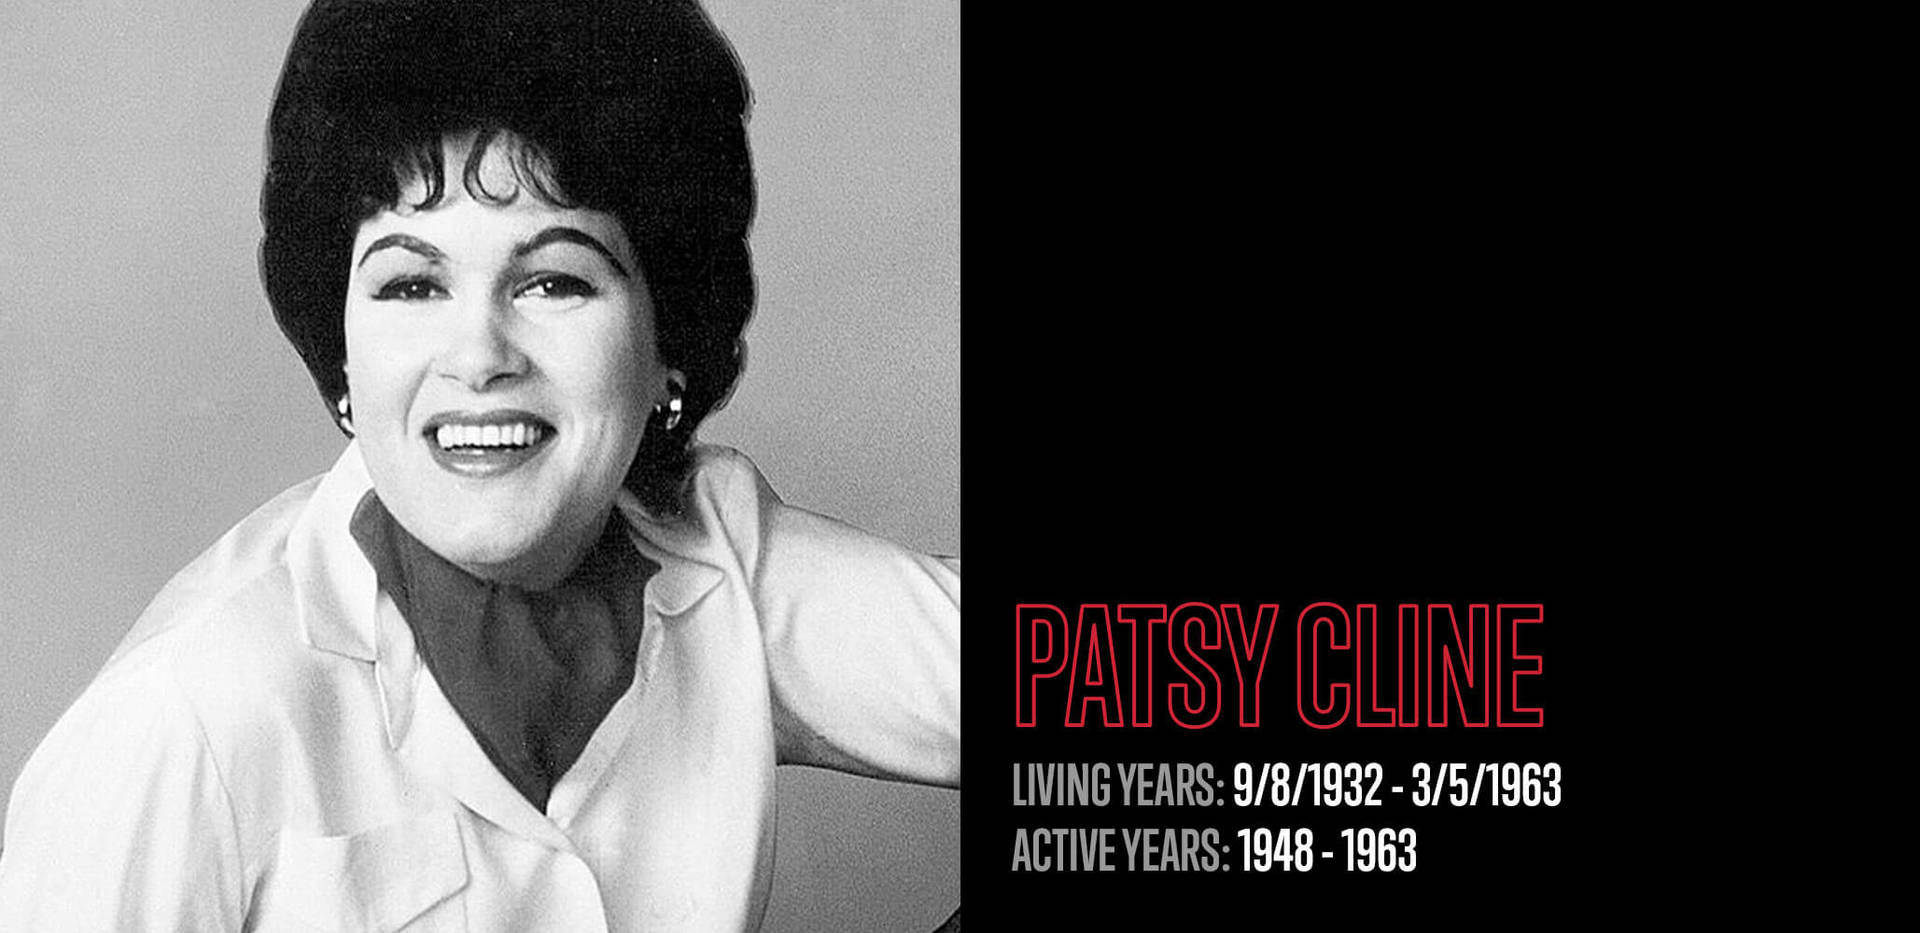 Caption: Legendary Patsy Cline in her Prime Wallpaper